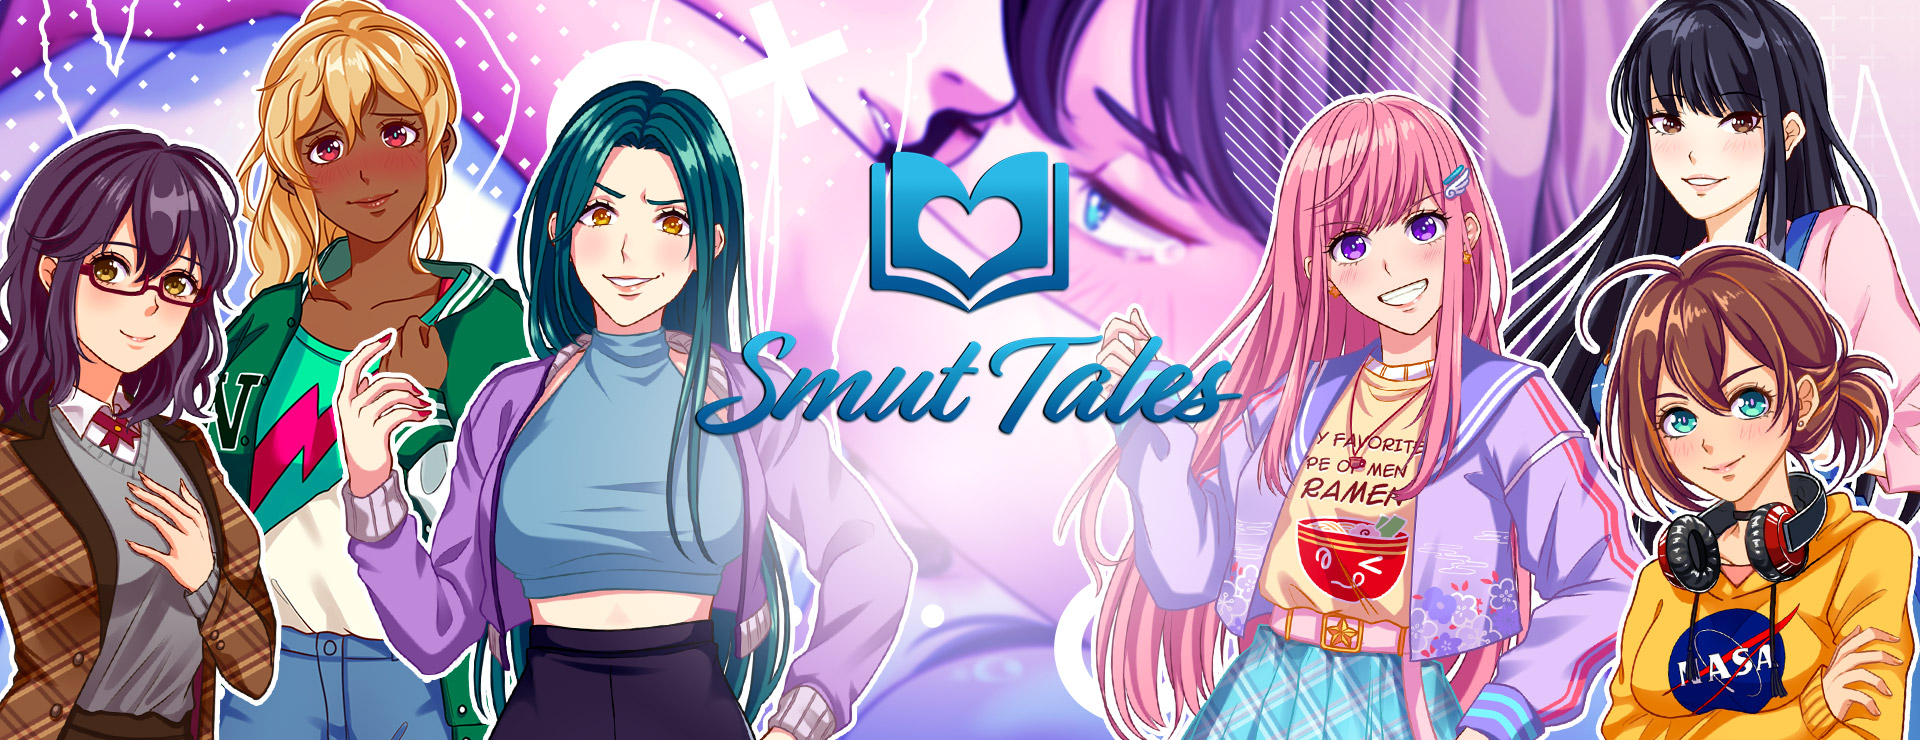 Smut Tales - Dating Sim Game Hentai Visual Novel